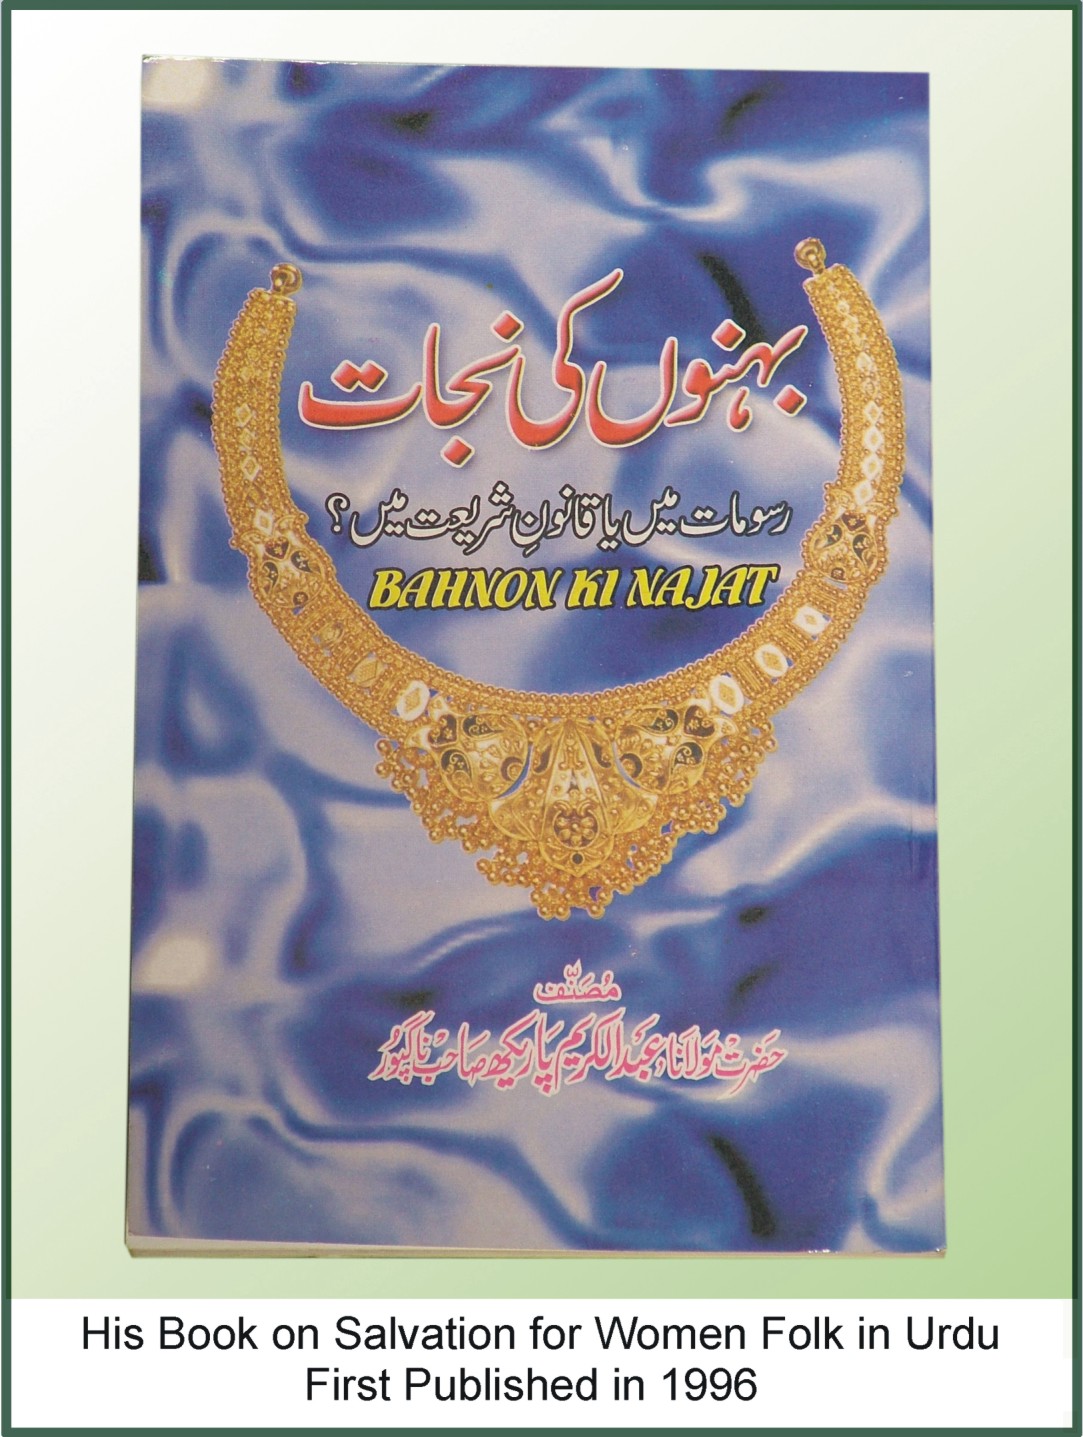 Salvation for Women Folk (Urdu) First Published in 1996